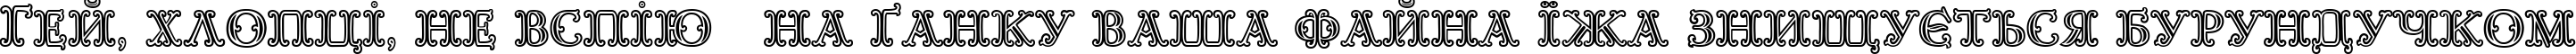 Пример написания шрифтом Goudy Decor InitialC текста на украинском